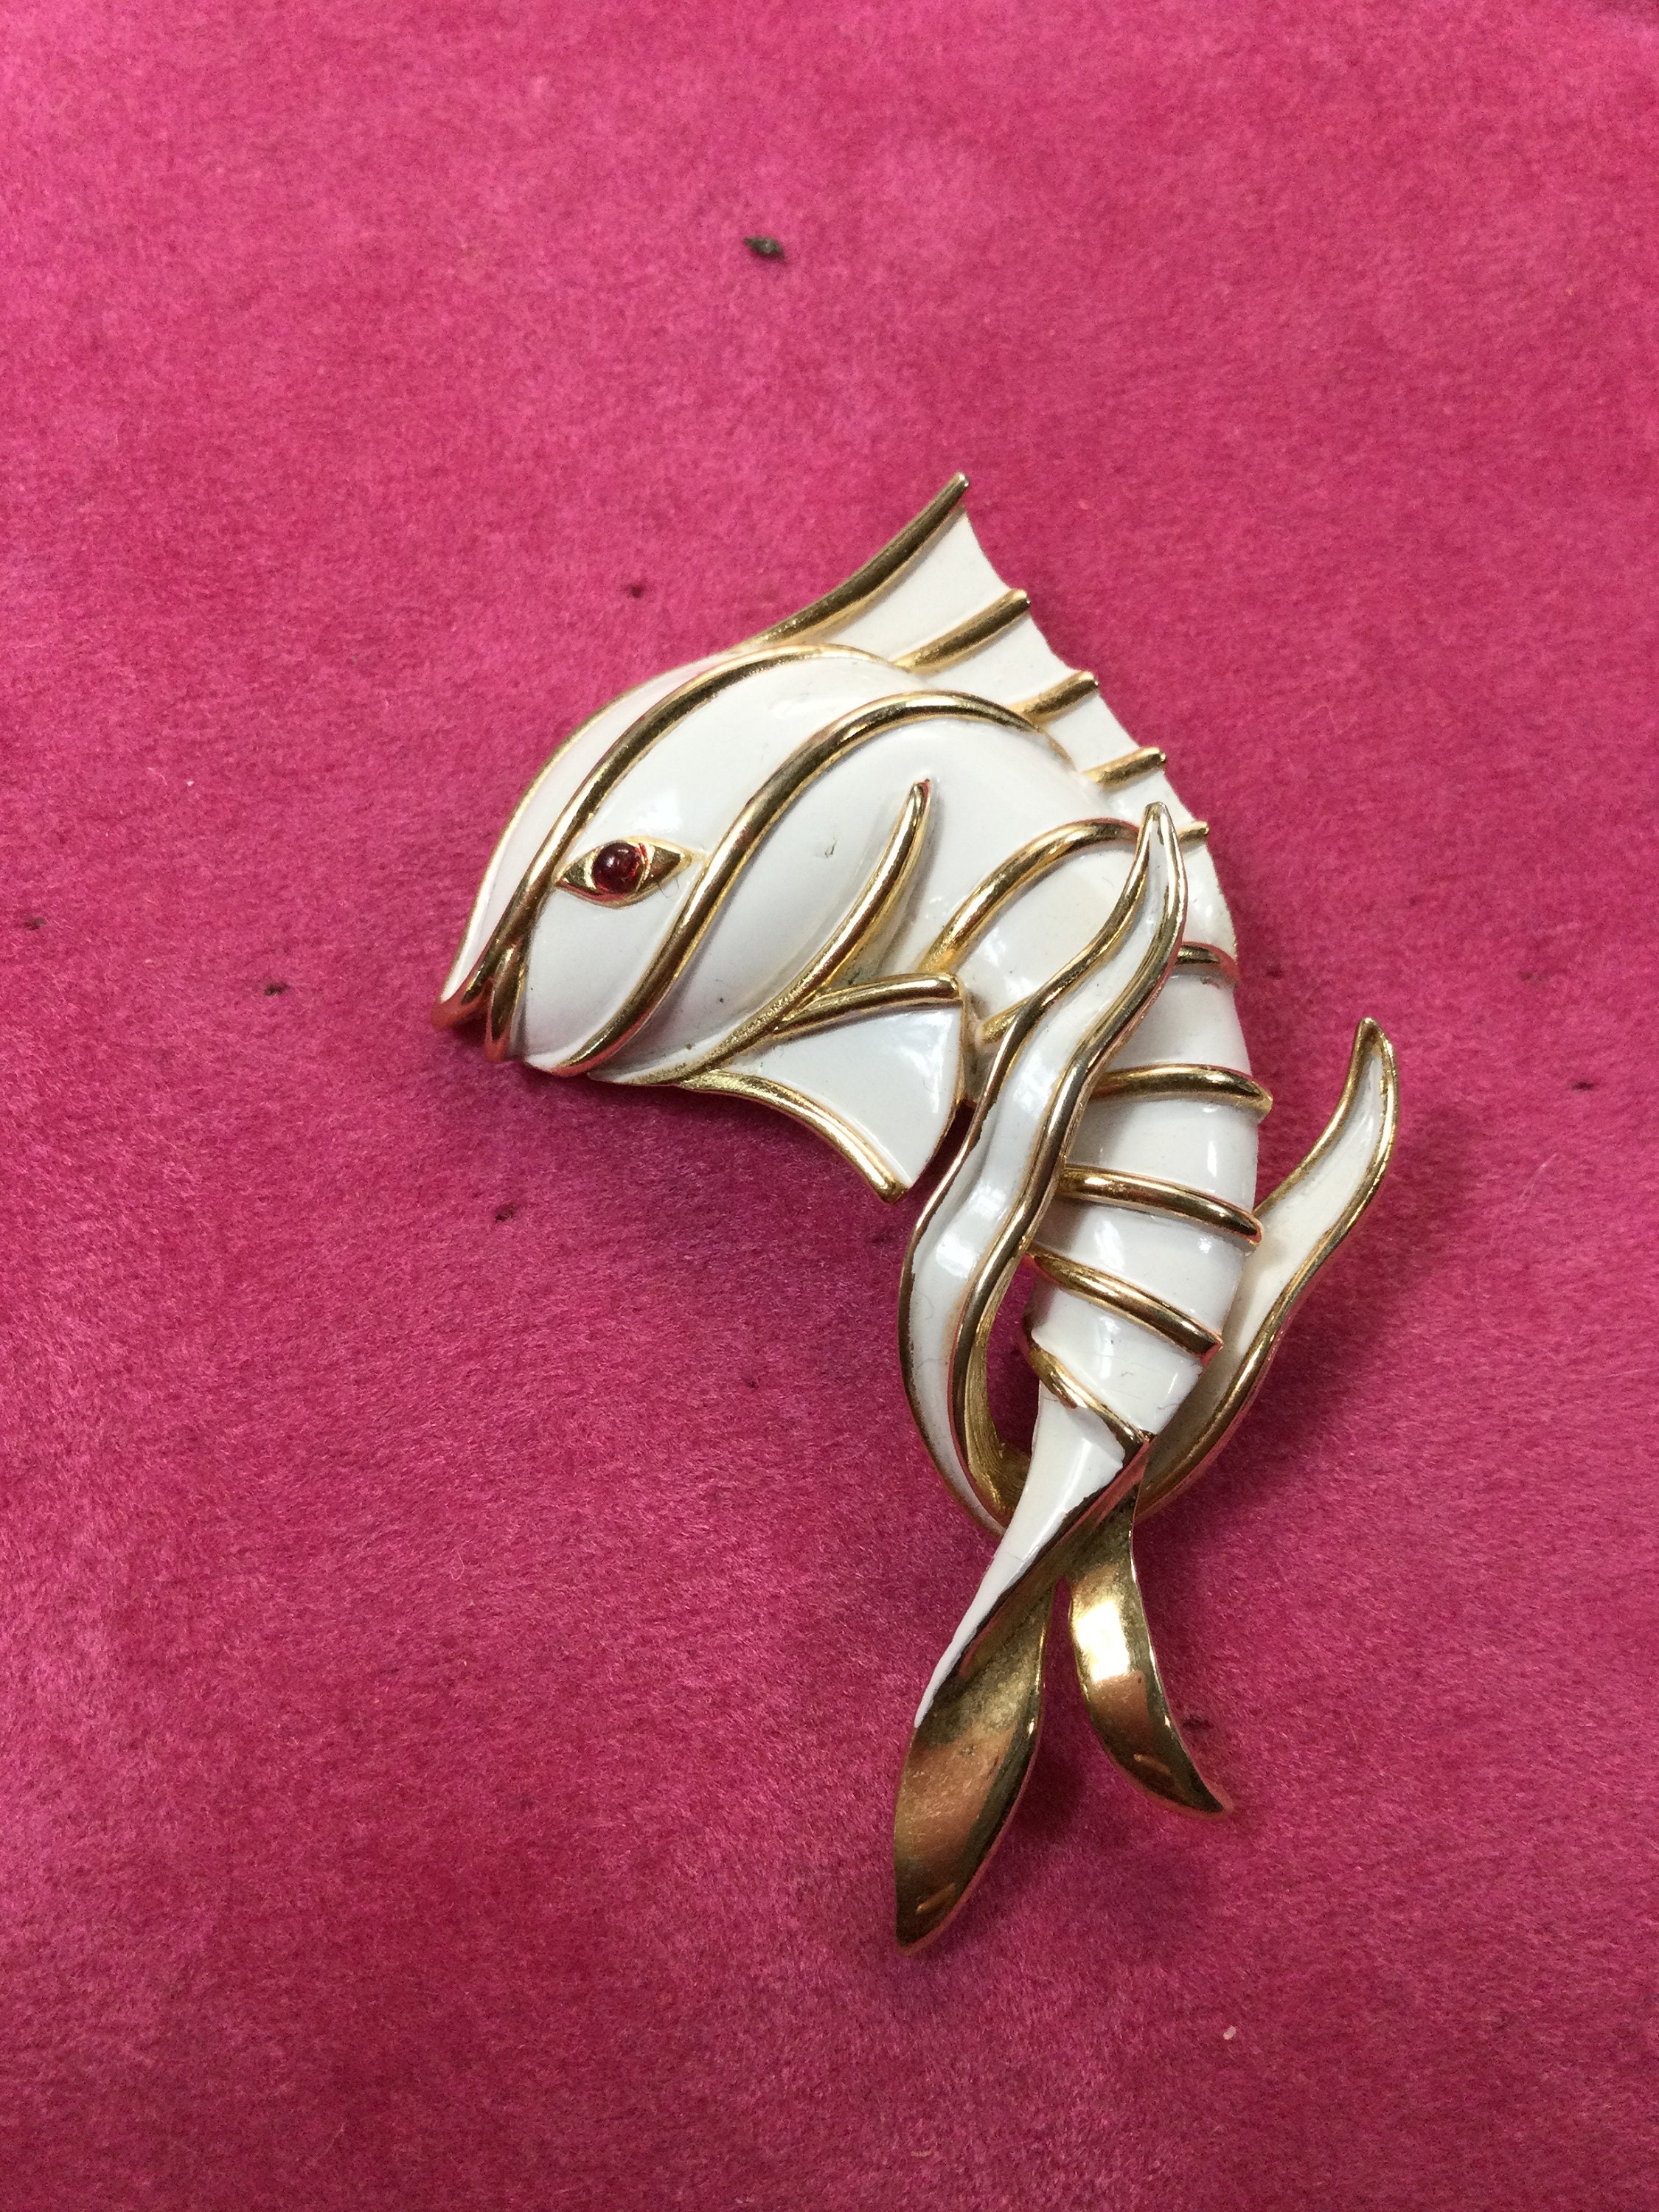 Ryba Fish Cutting Board – My Polish Heritage